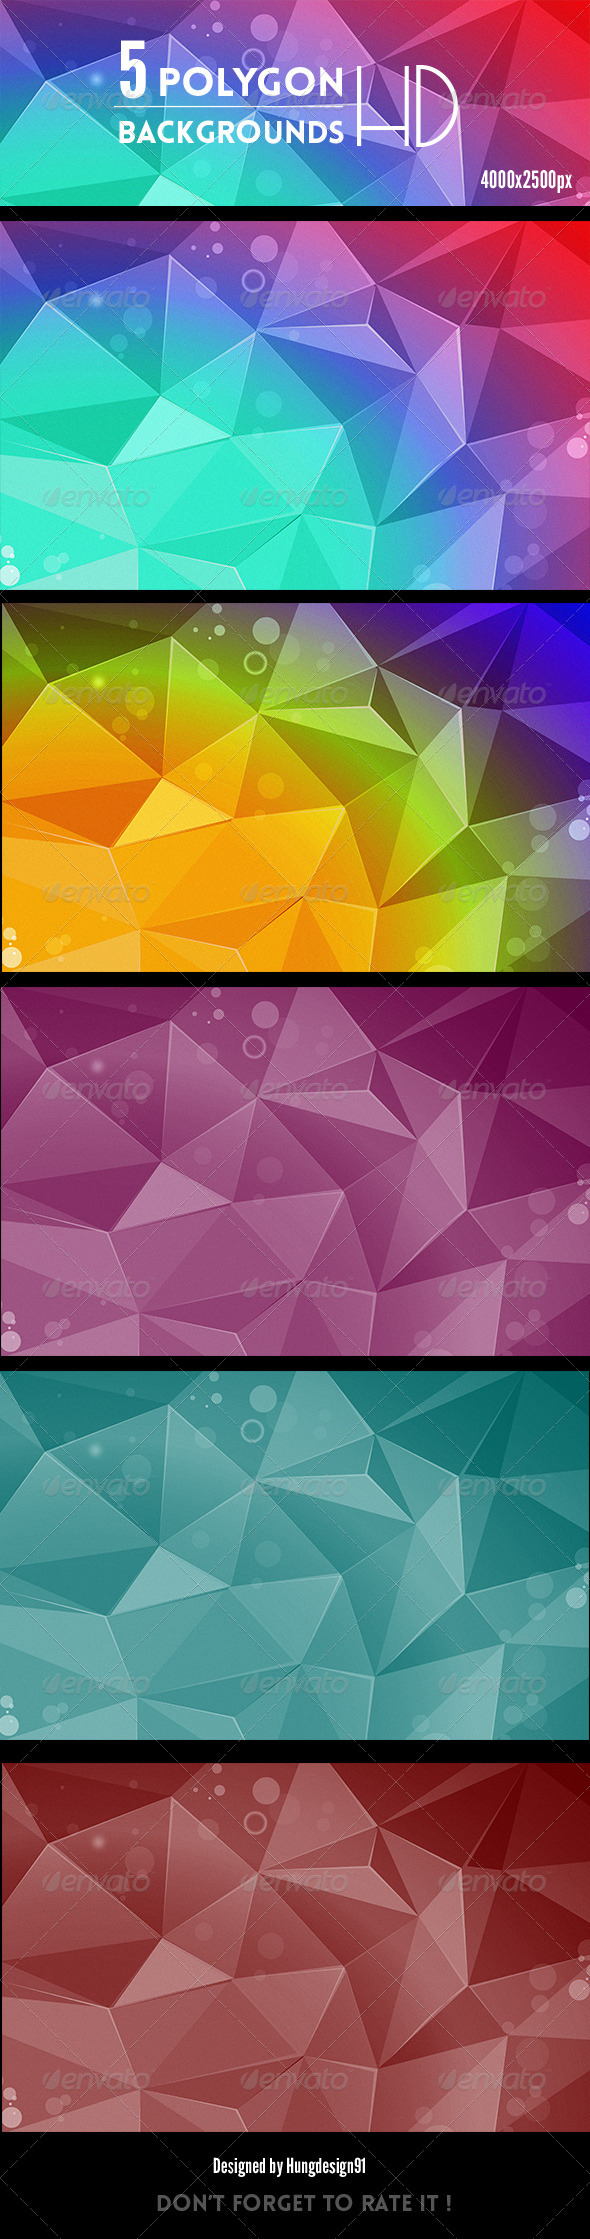 5 Amazing Polygon Backgrounds HD